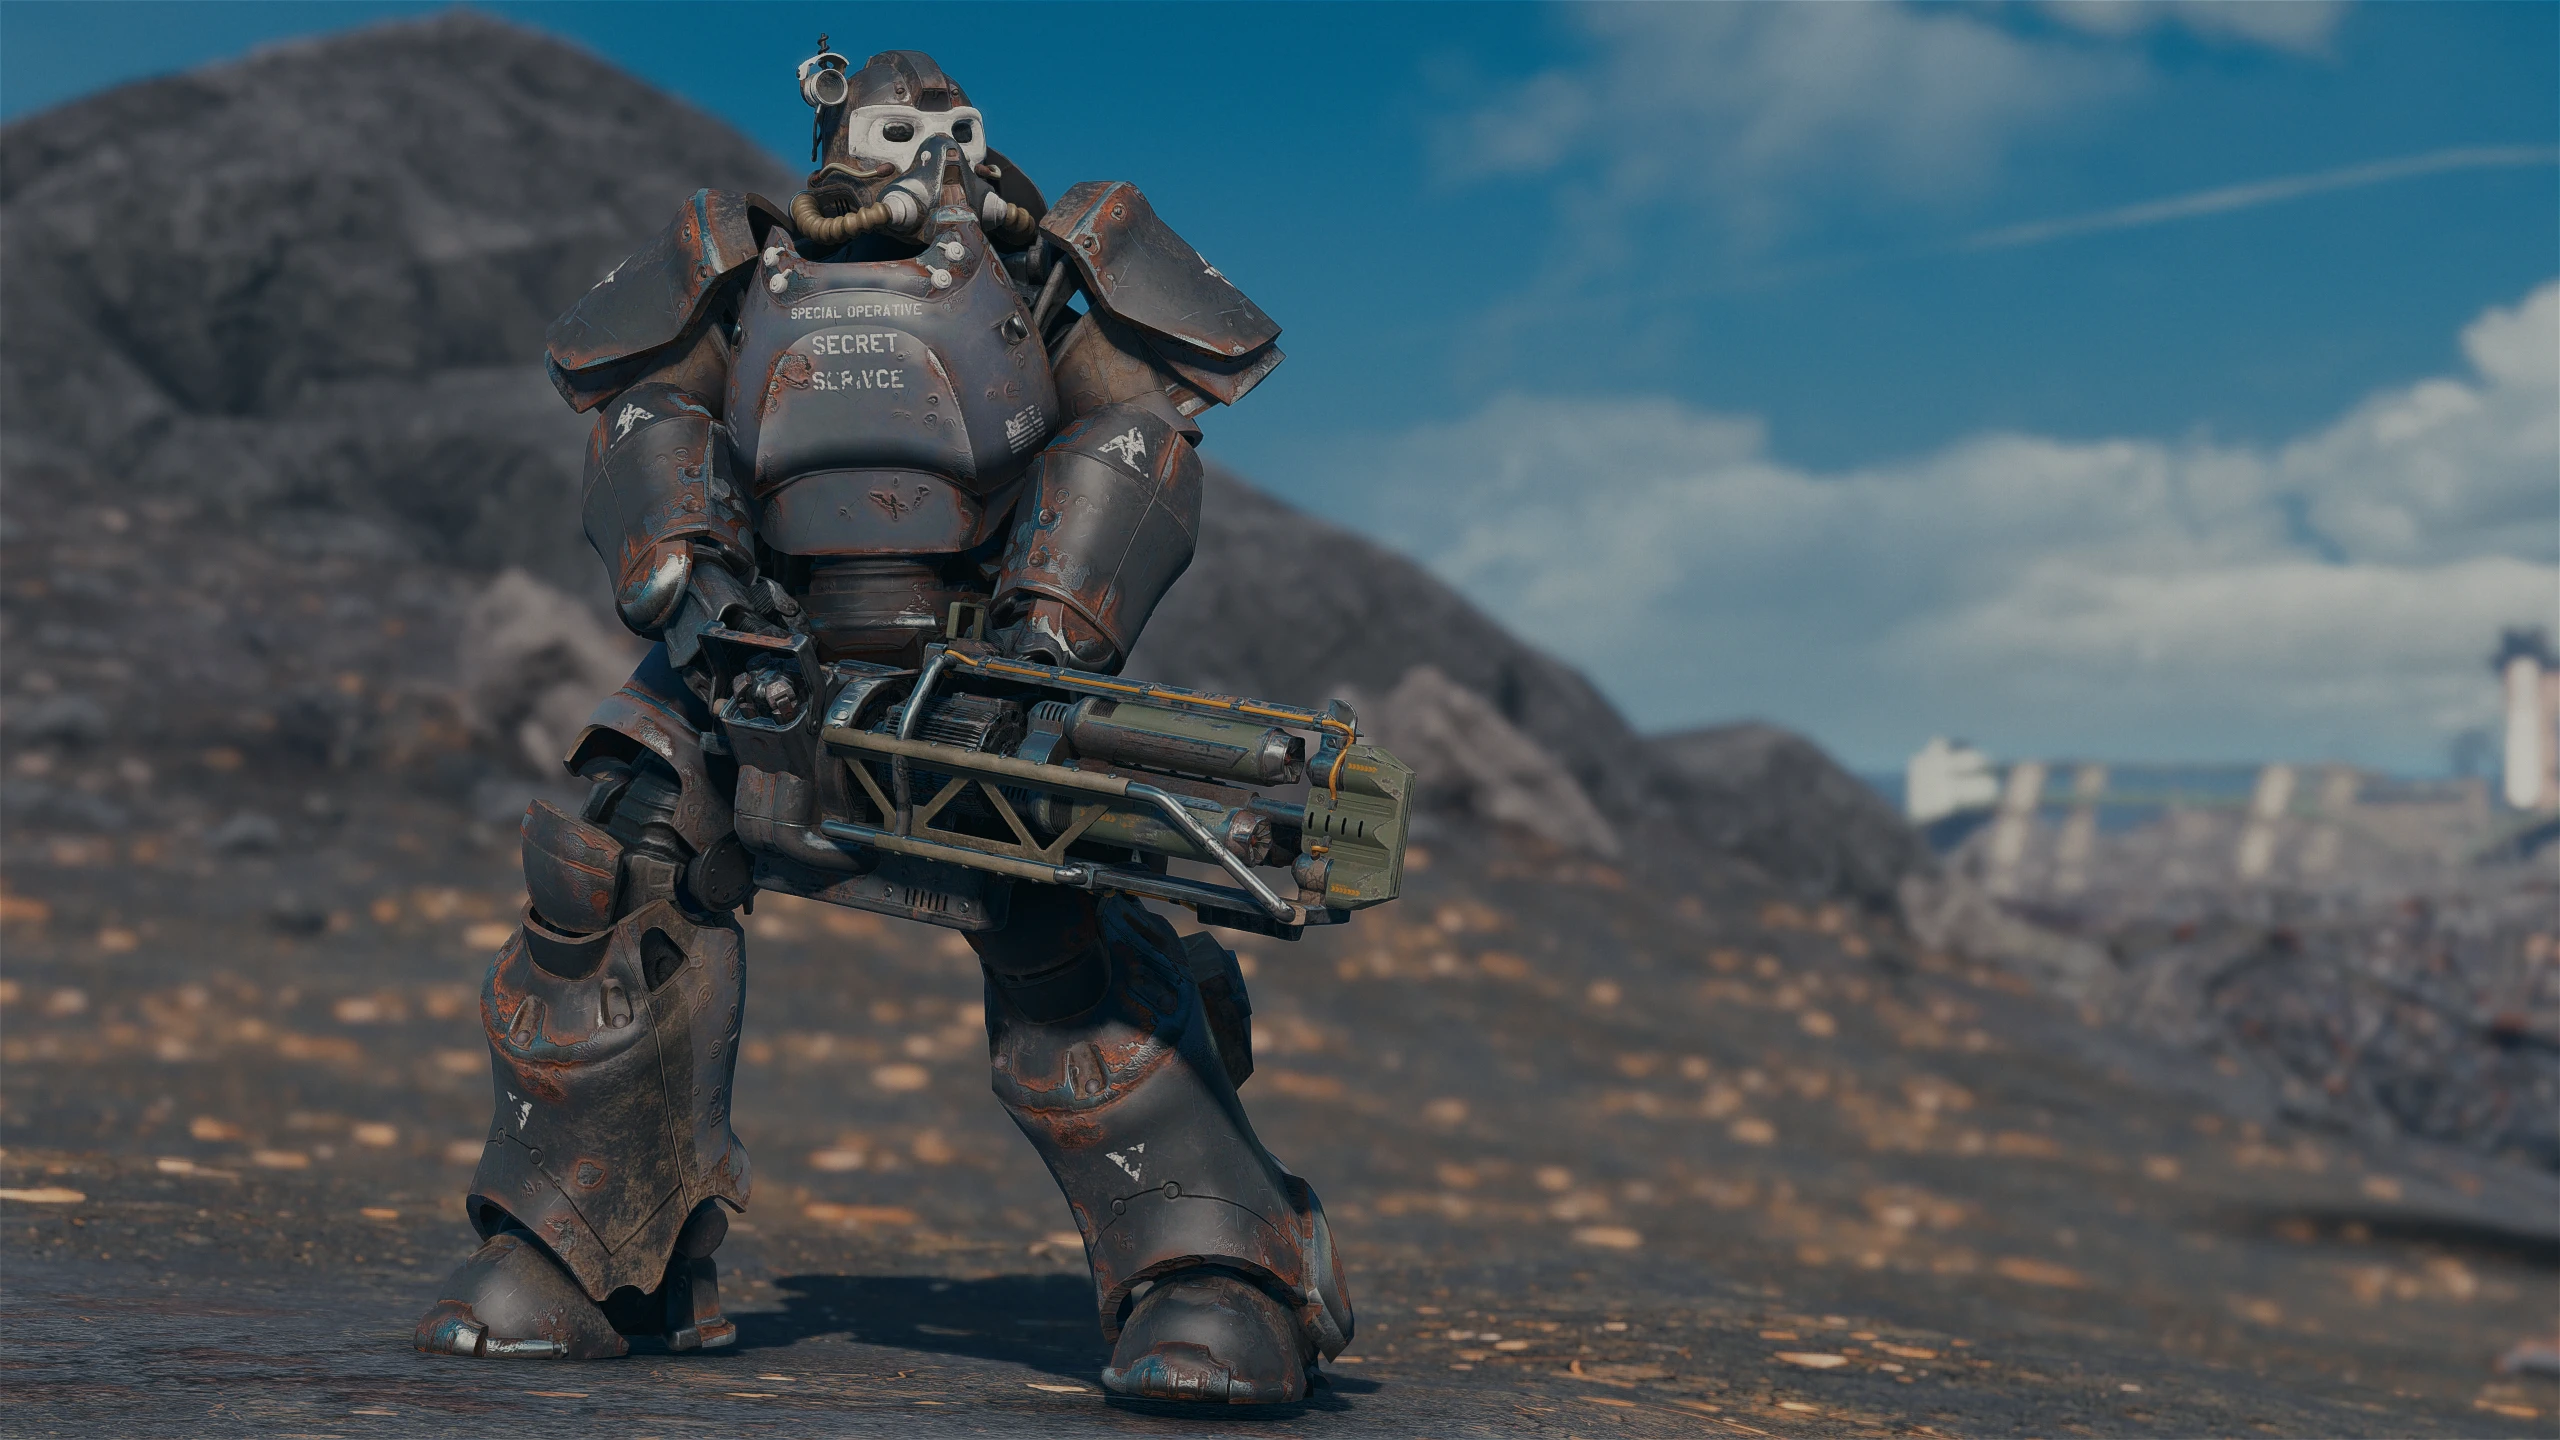 T 65 Power Armor at Fallout 4 Nexus Mods and community. www.nexusmods.com. 